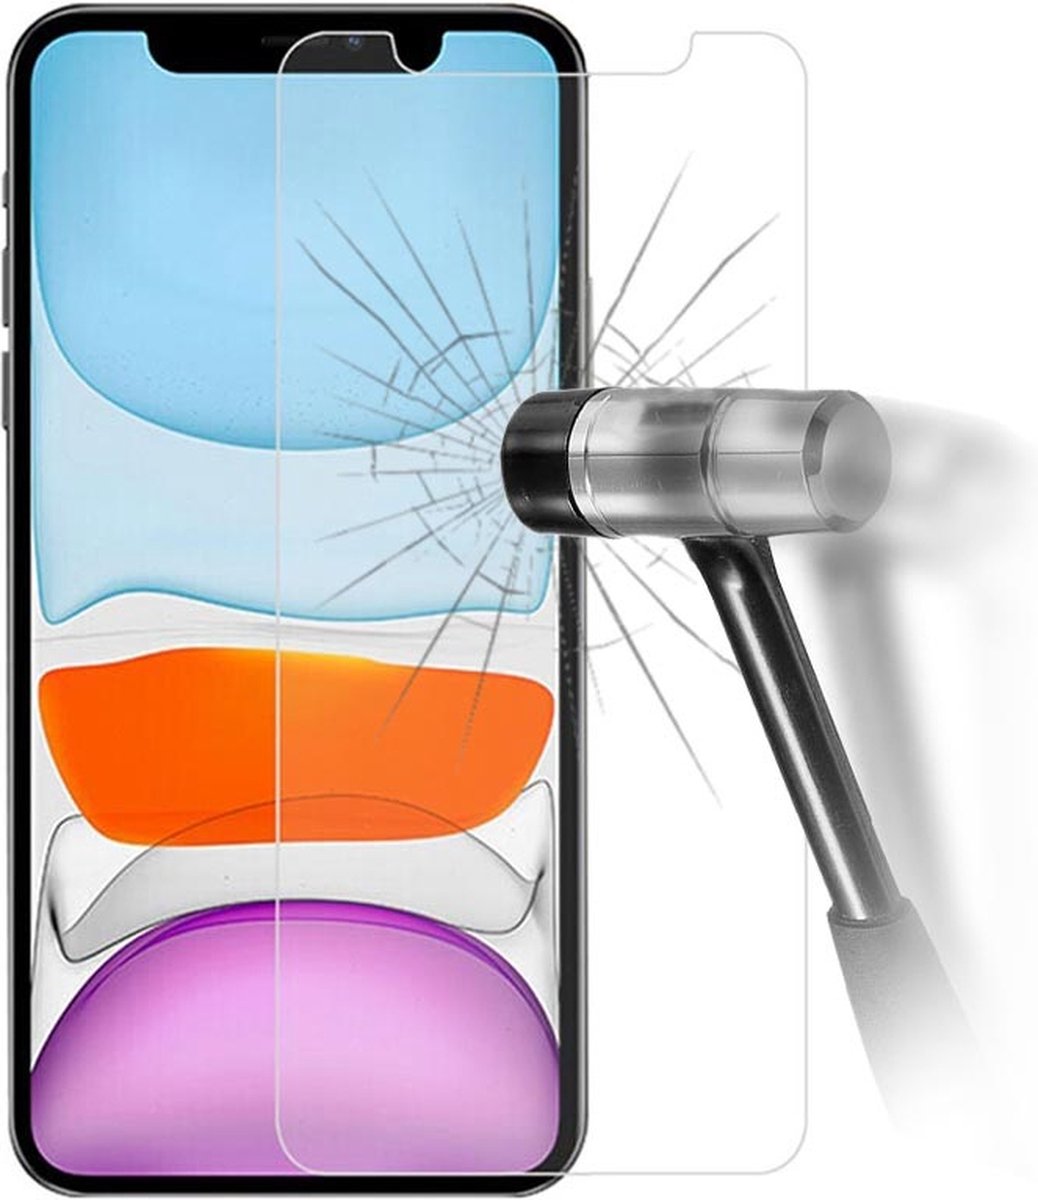 iphone 12 mini screen protector, glass screen protector